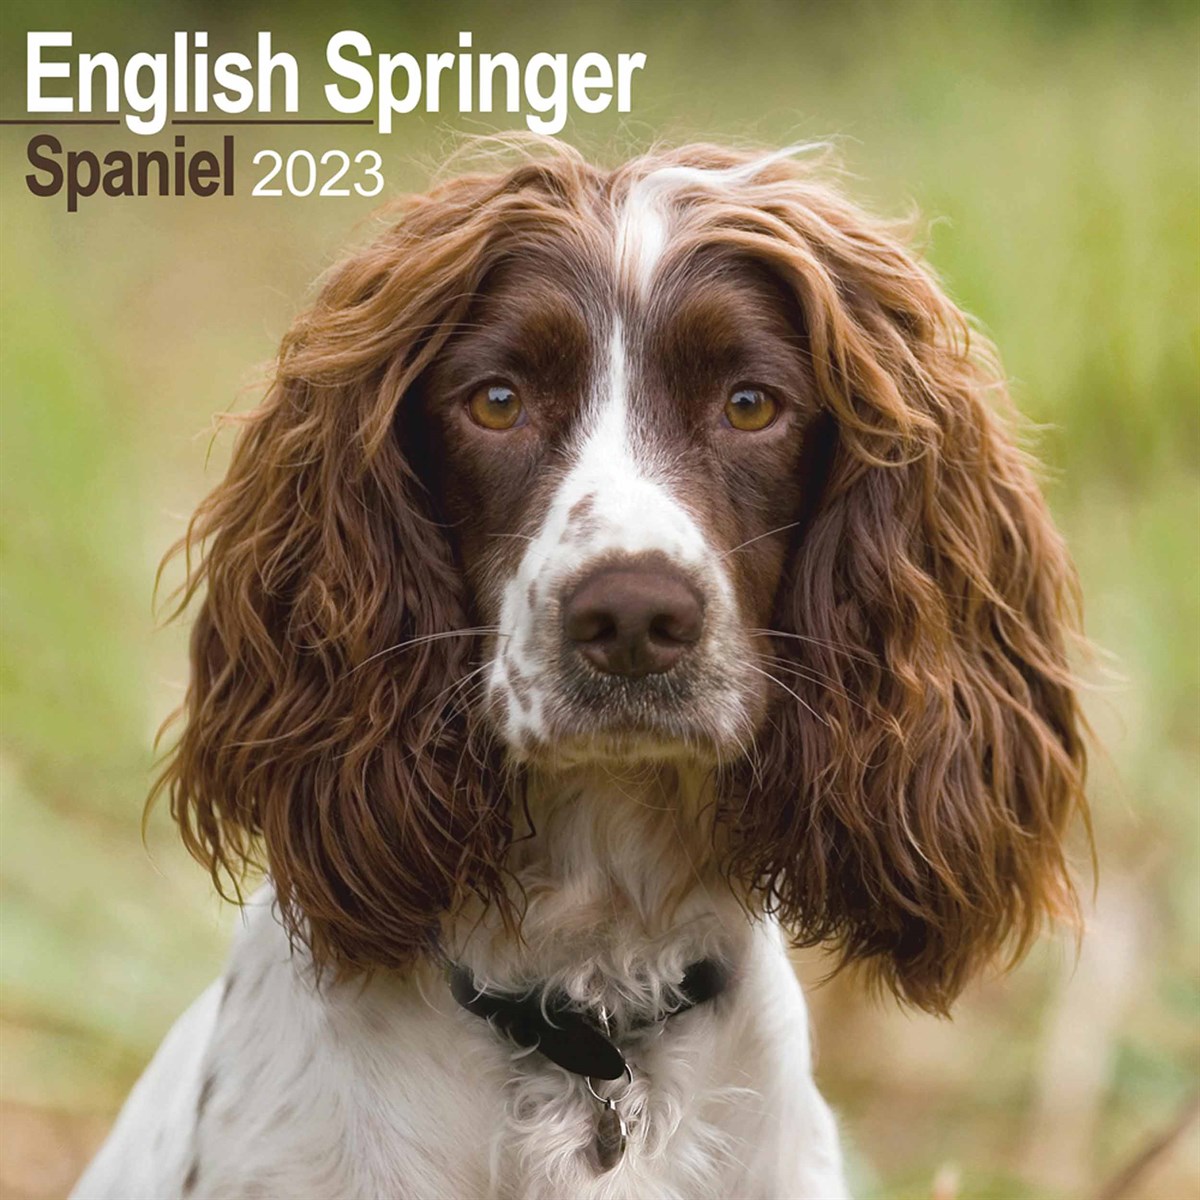 English Springer Spaniel 2023 Calendars